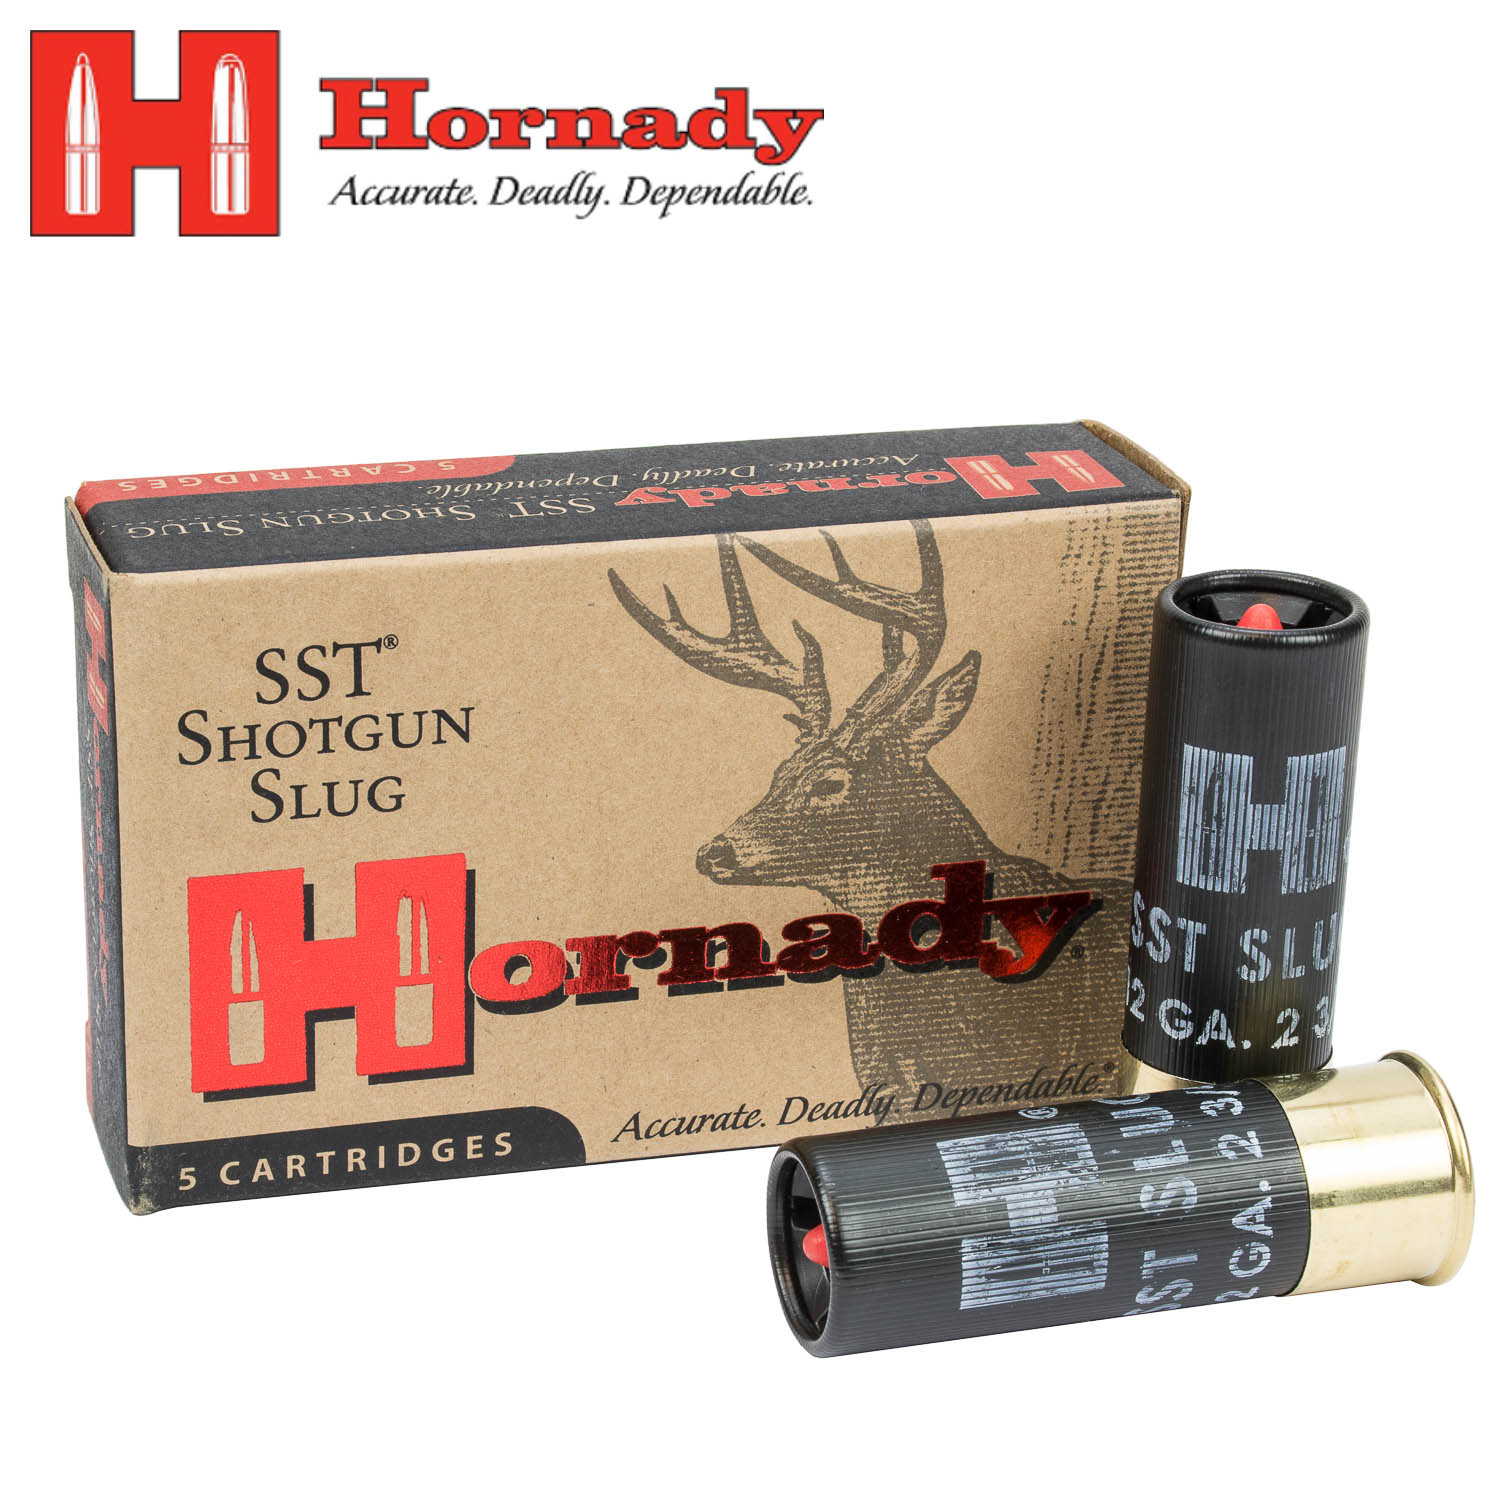 hornady sabot slug ballistics - www.optuseducation.com.